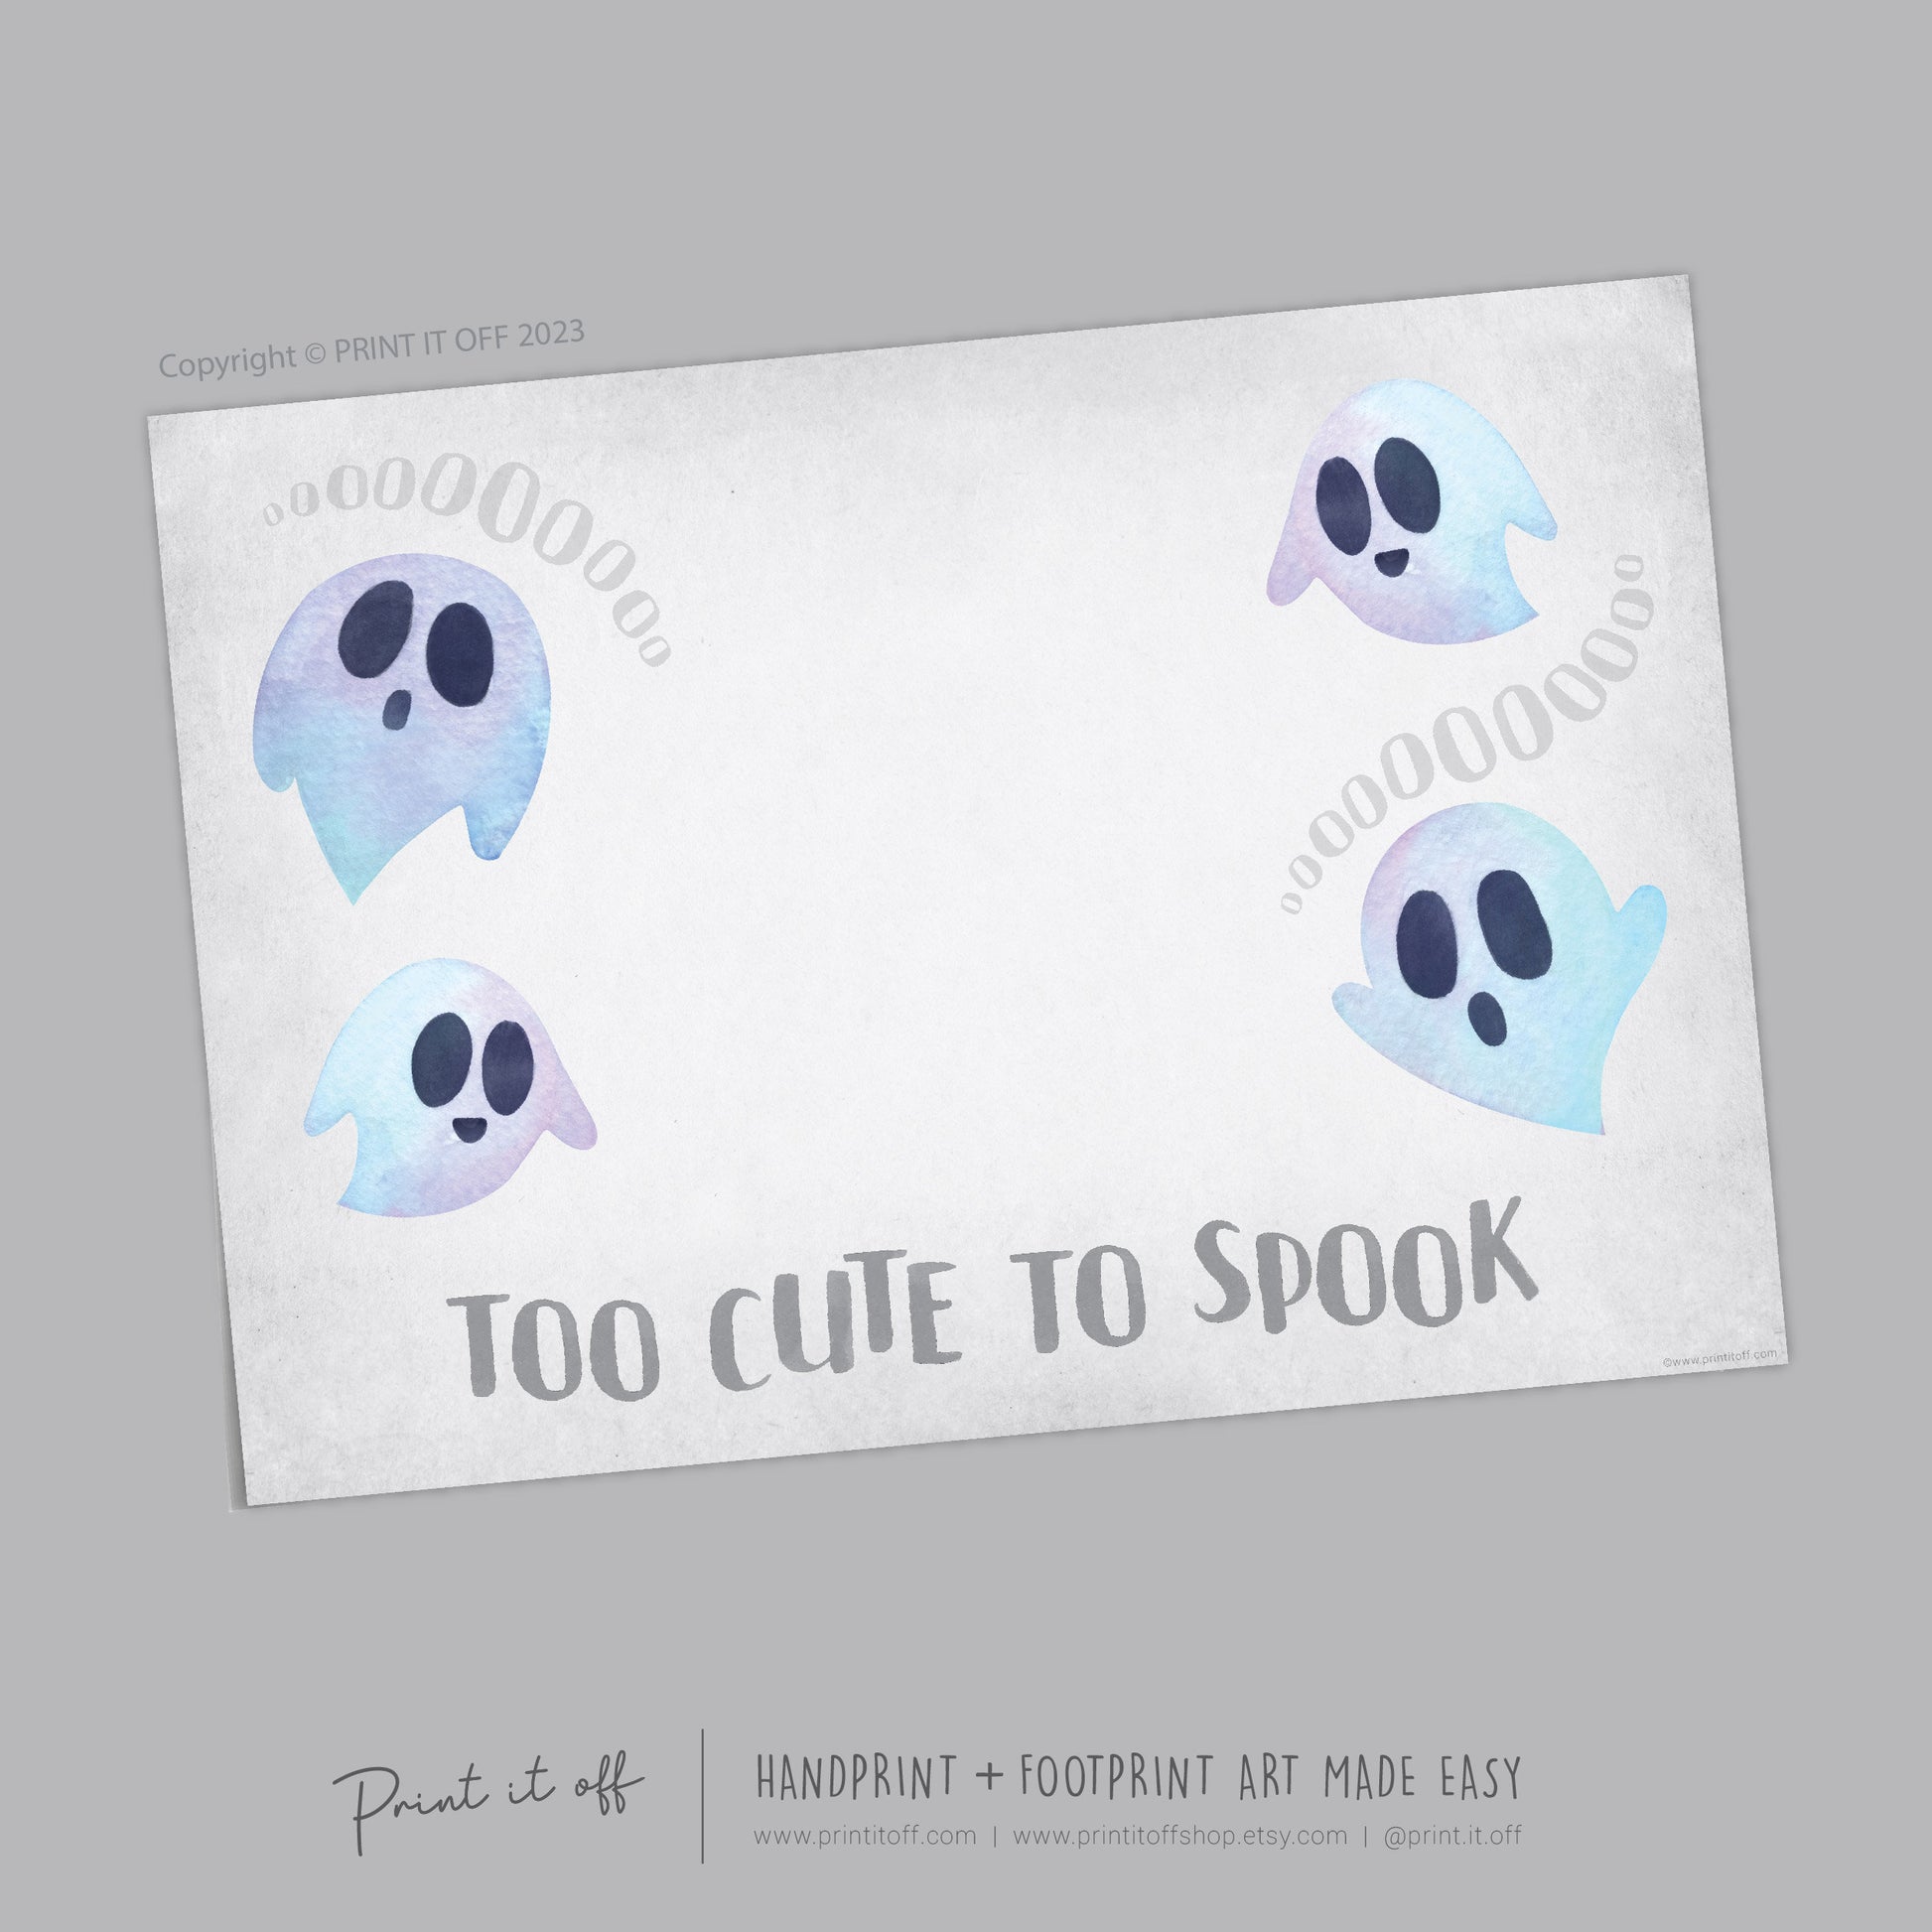 Too Cute to Spook Ghost Footprint Handprint Foot Hand Halloween Art Craft / Kids Toddler Baby DIY Memory Activity / Print It Off